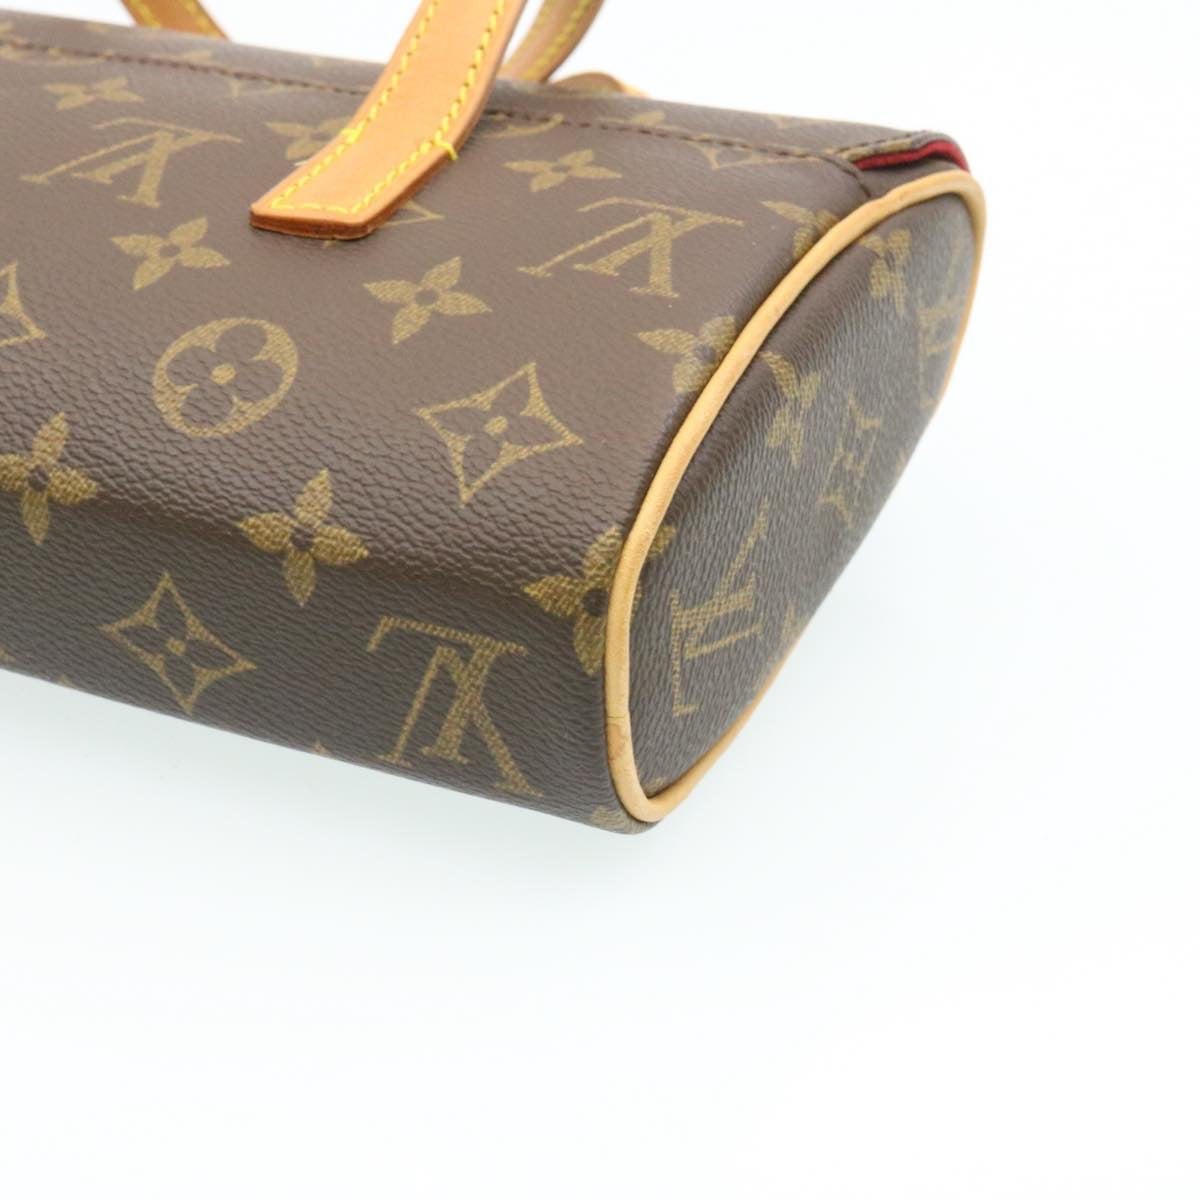 Louis Vuitton - Authenticated Sonatine Handbag - Cloth Brown for Women, Good Condition